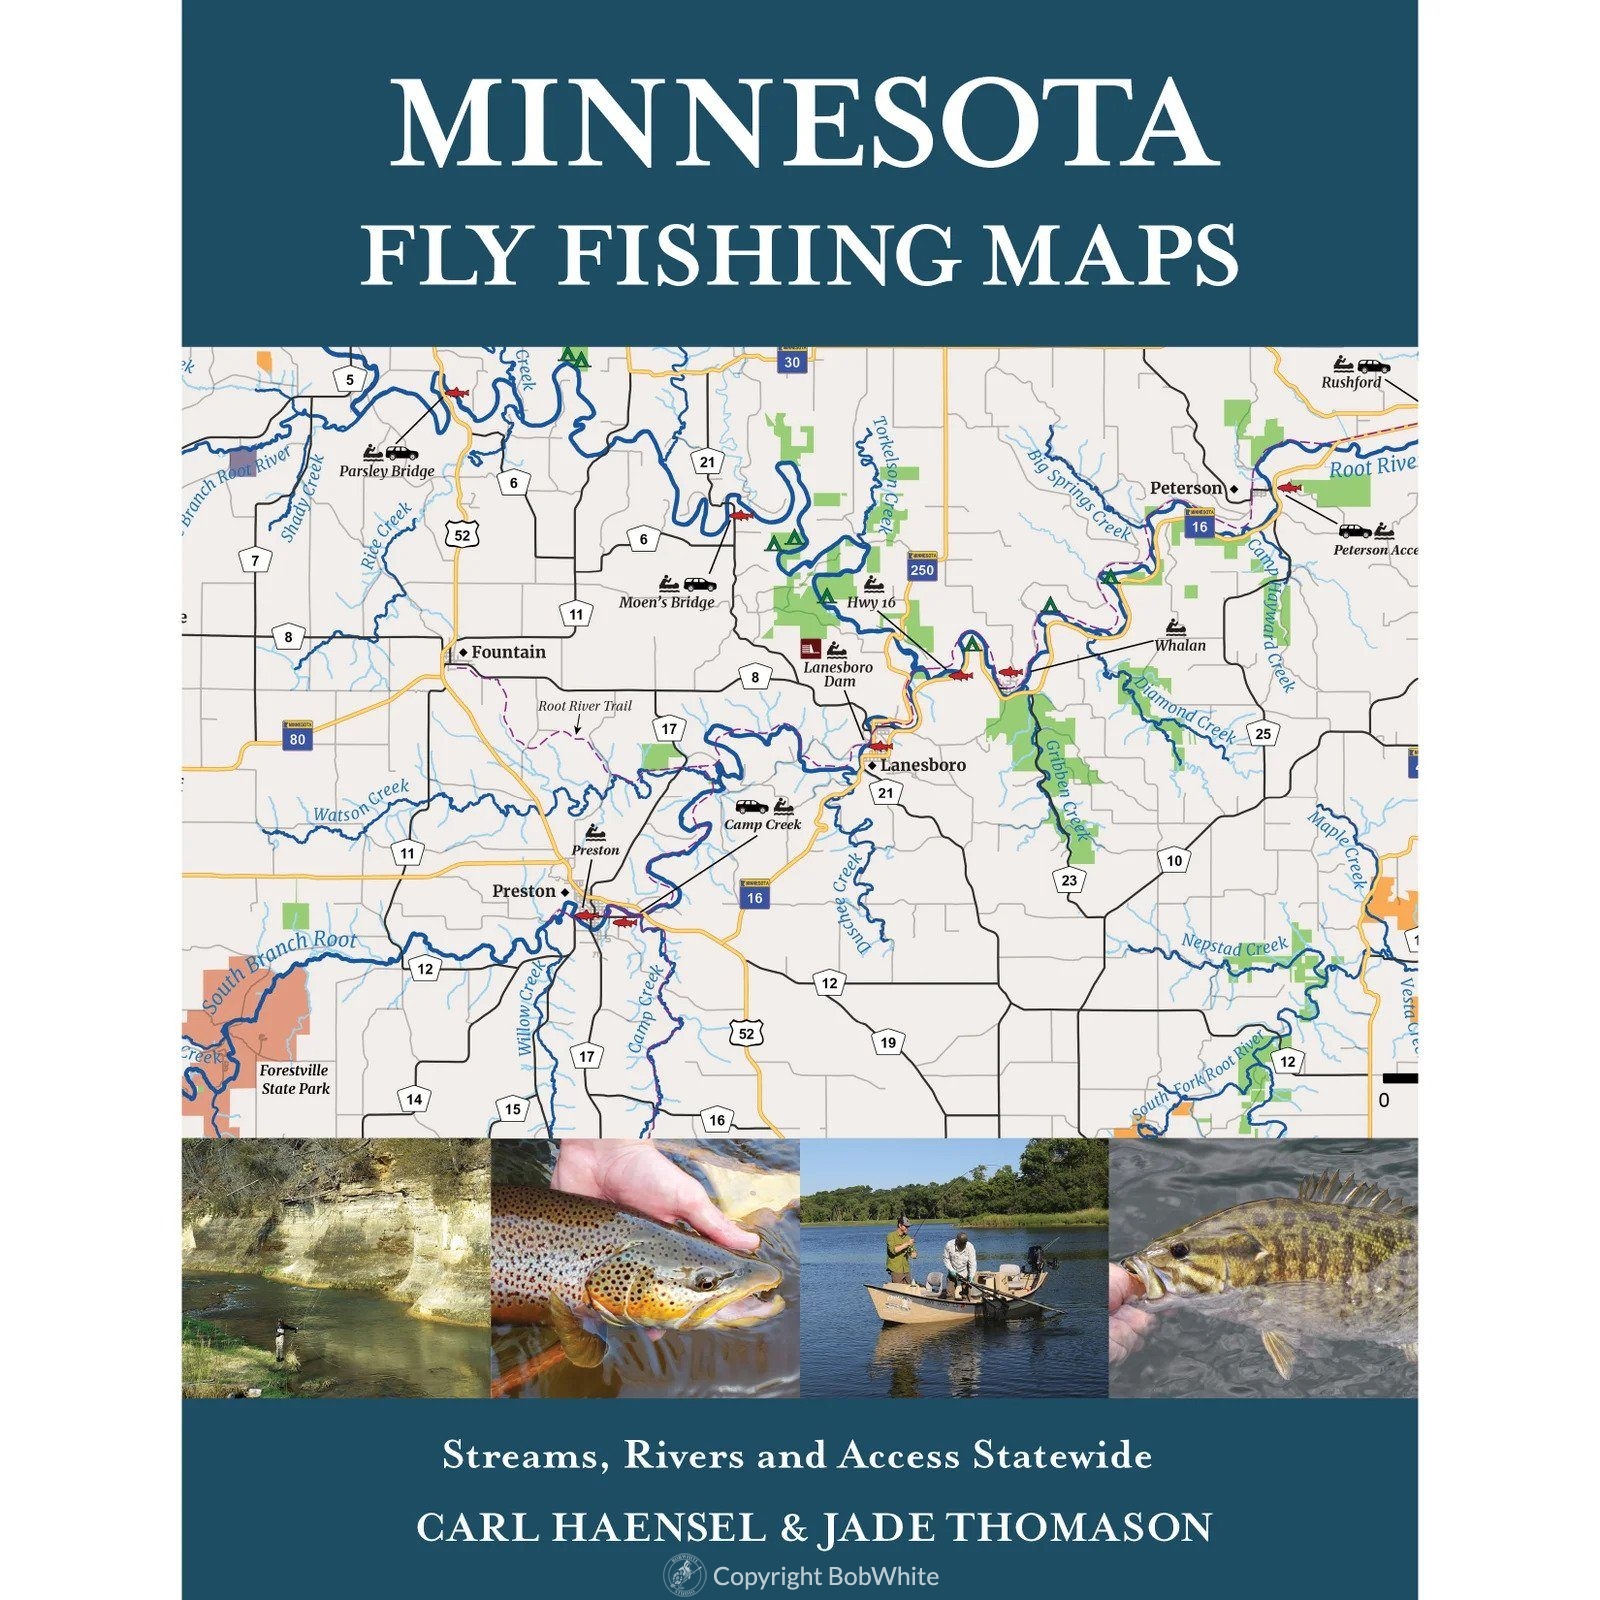 Minnesota Fly Fishing Maps by Carl Haensel and Jade Thomason - SIGNED